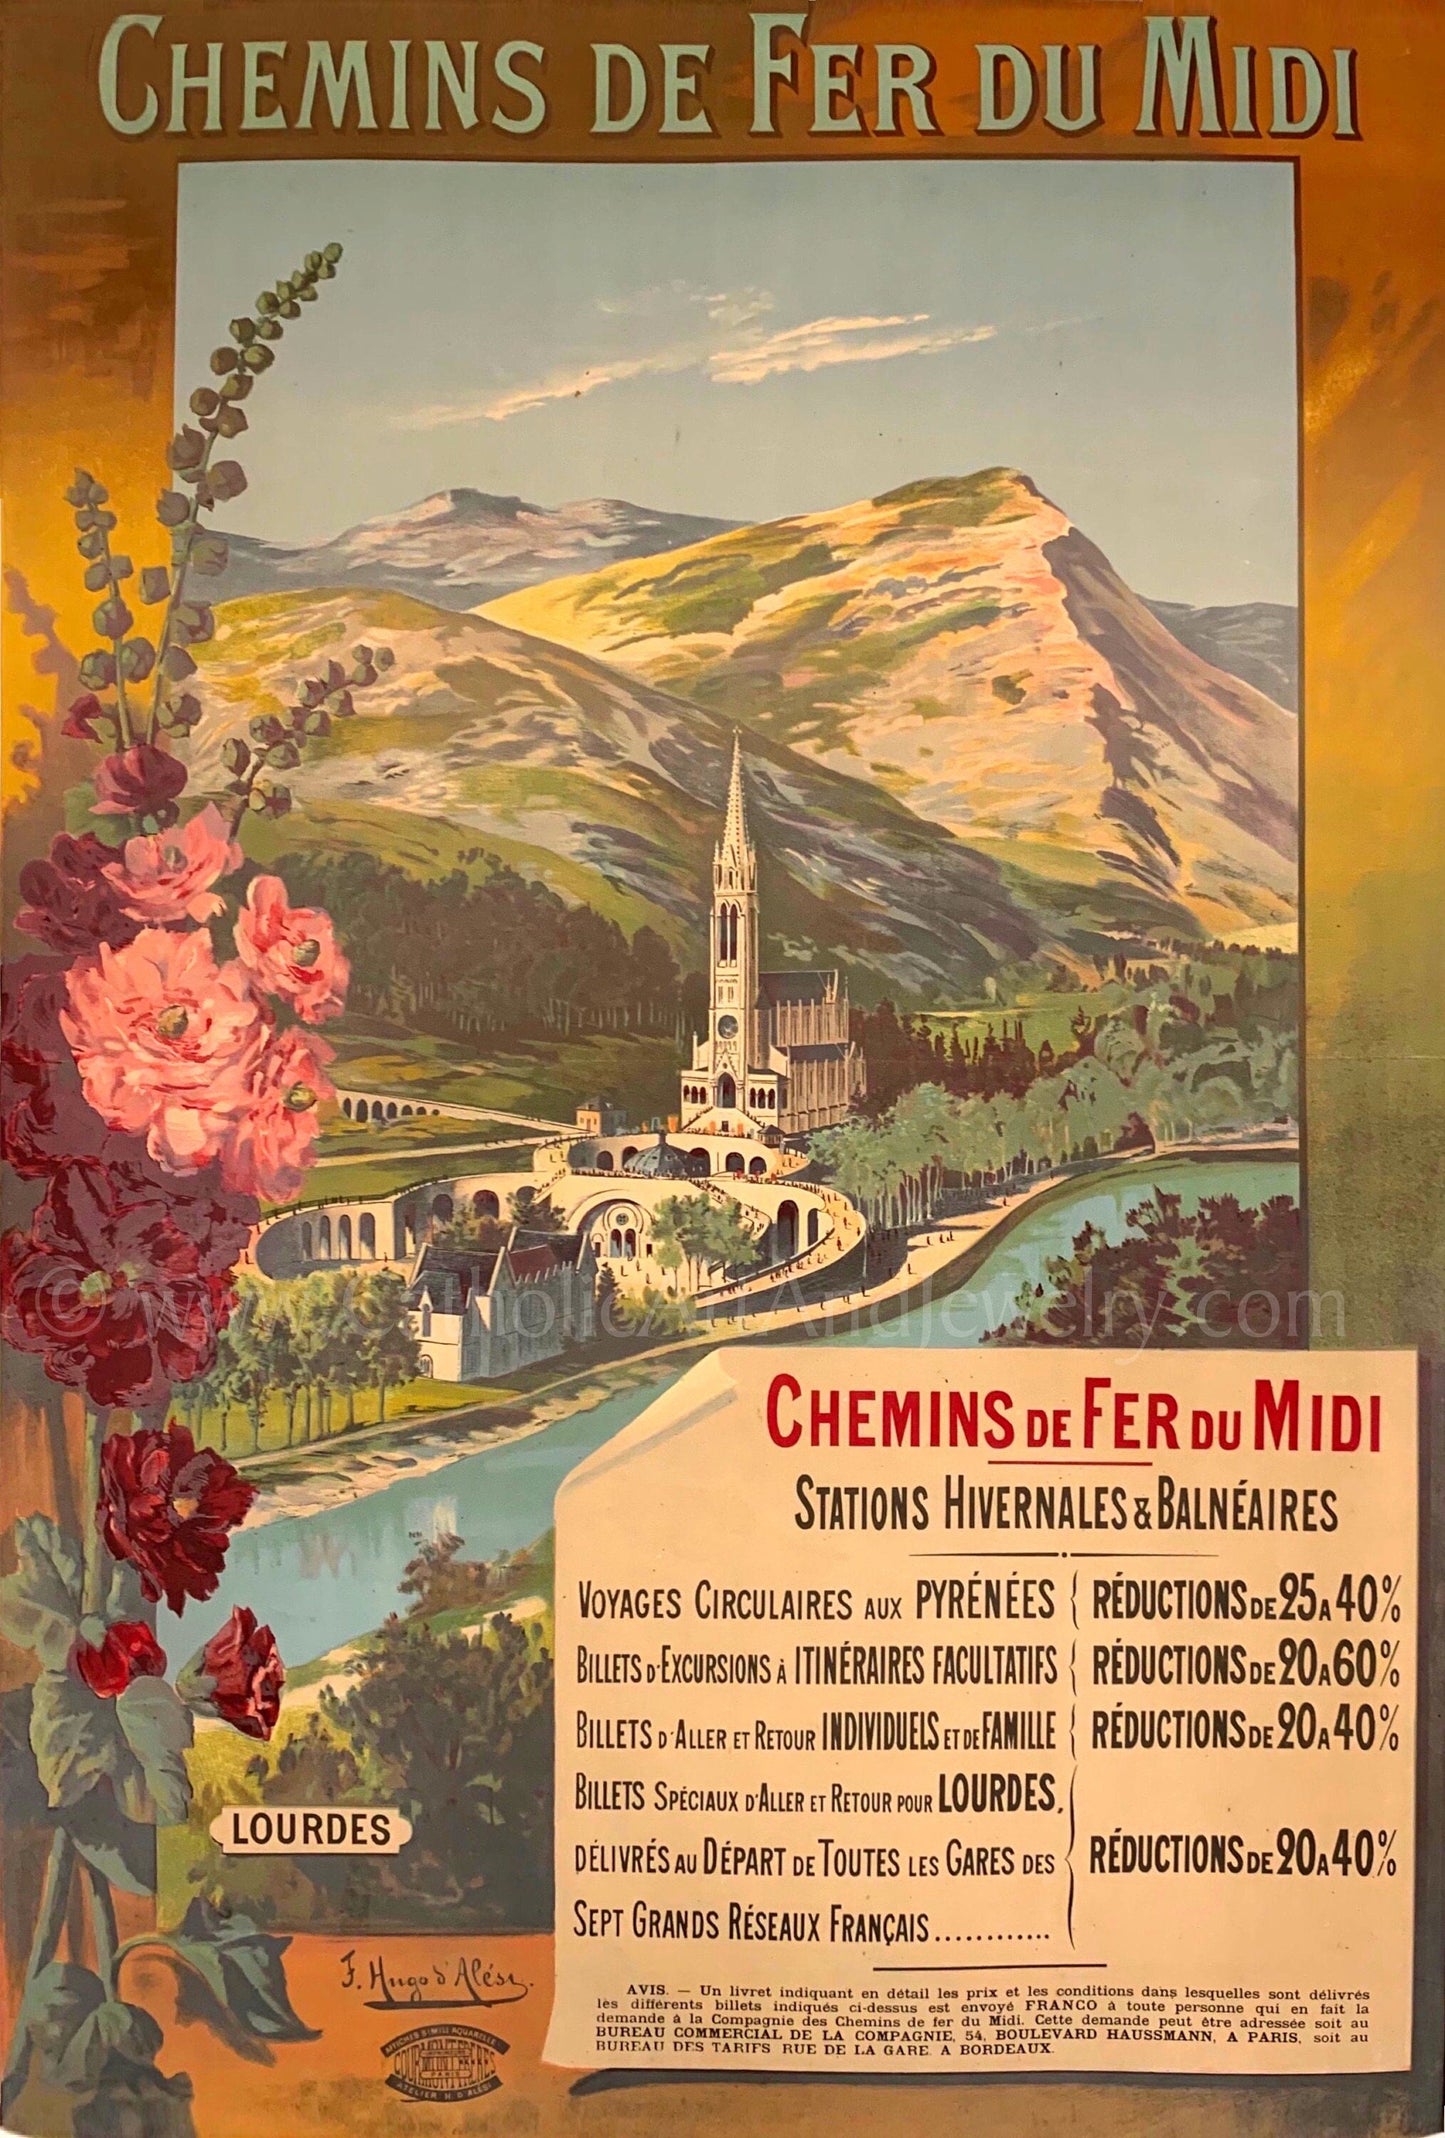 Lourdes Travel Poster – based on a Vintage French Travel Poster – Catholic Art Print